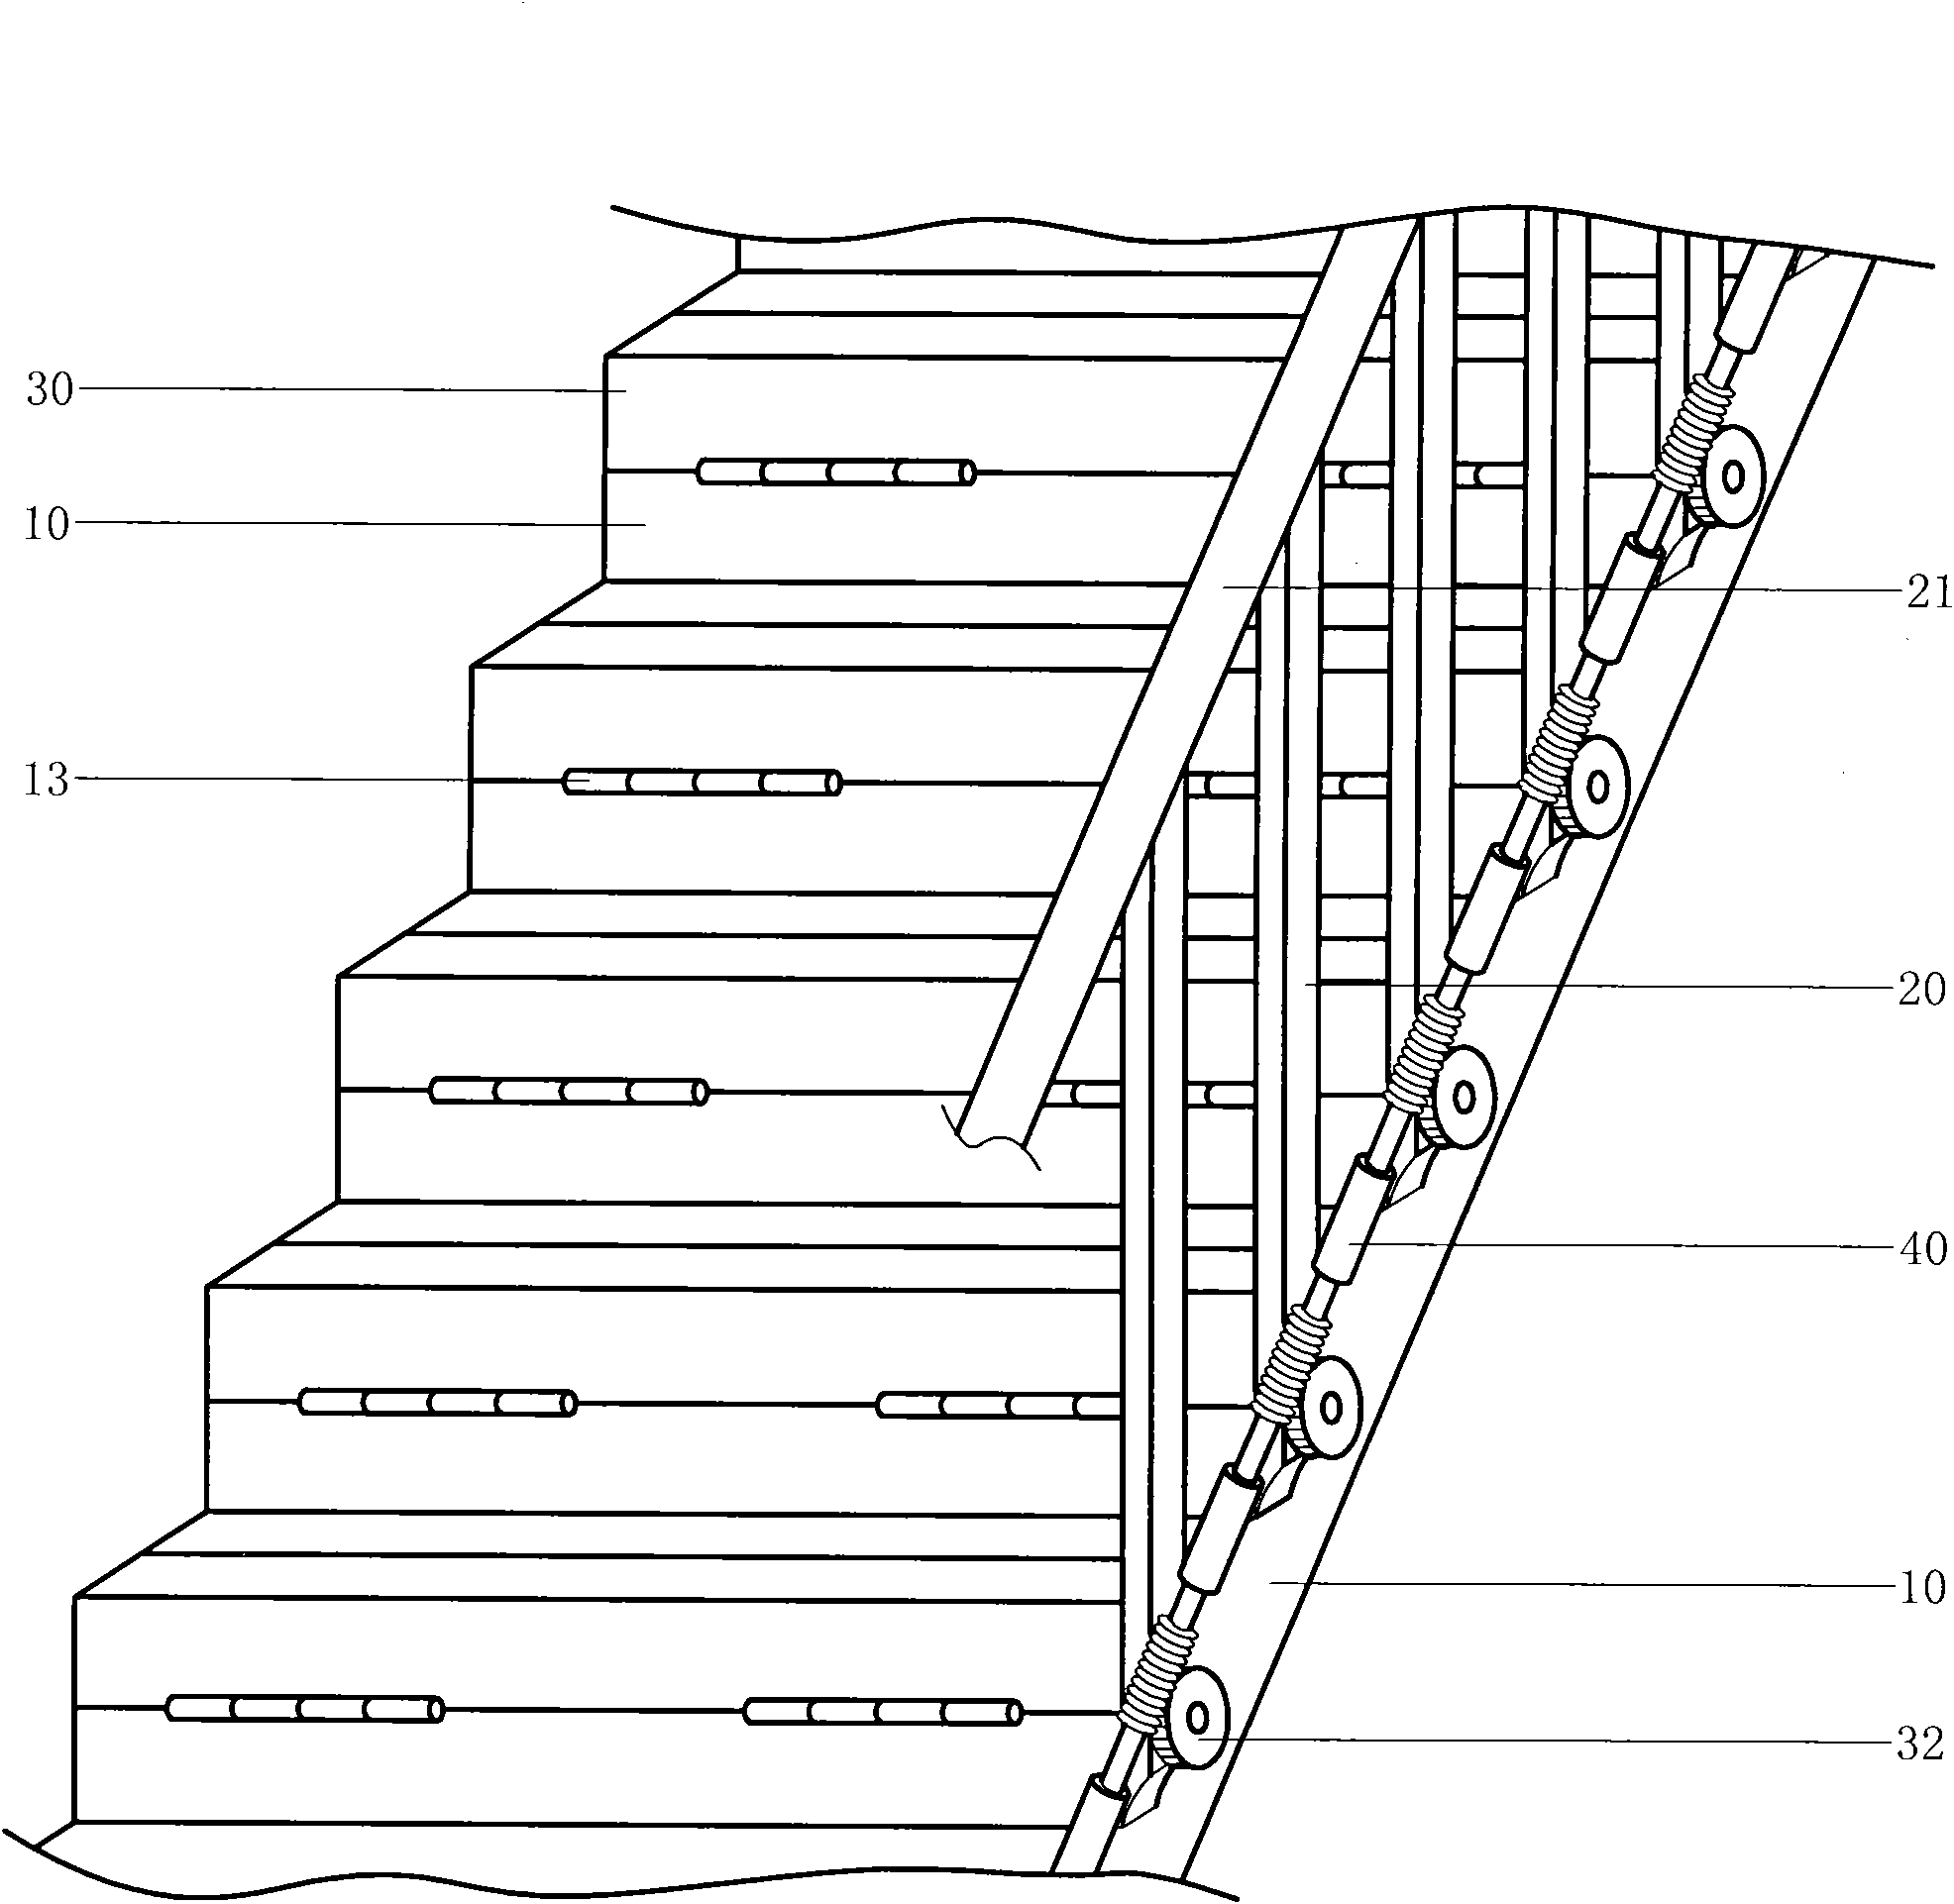 Step slope inter-exchange passage